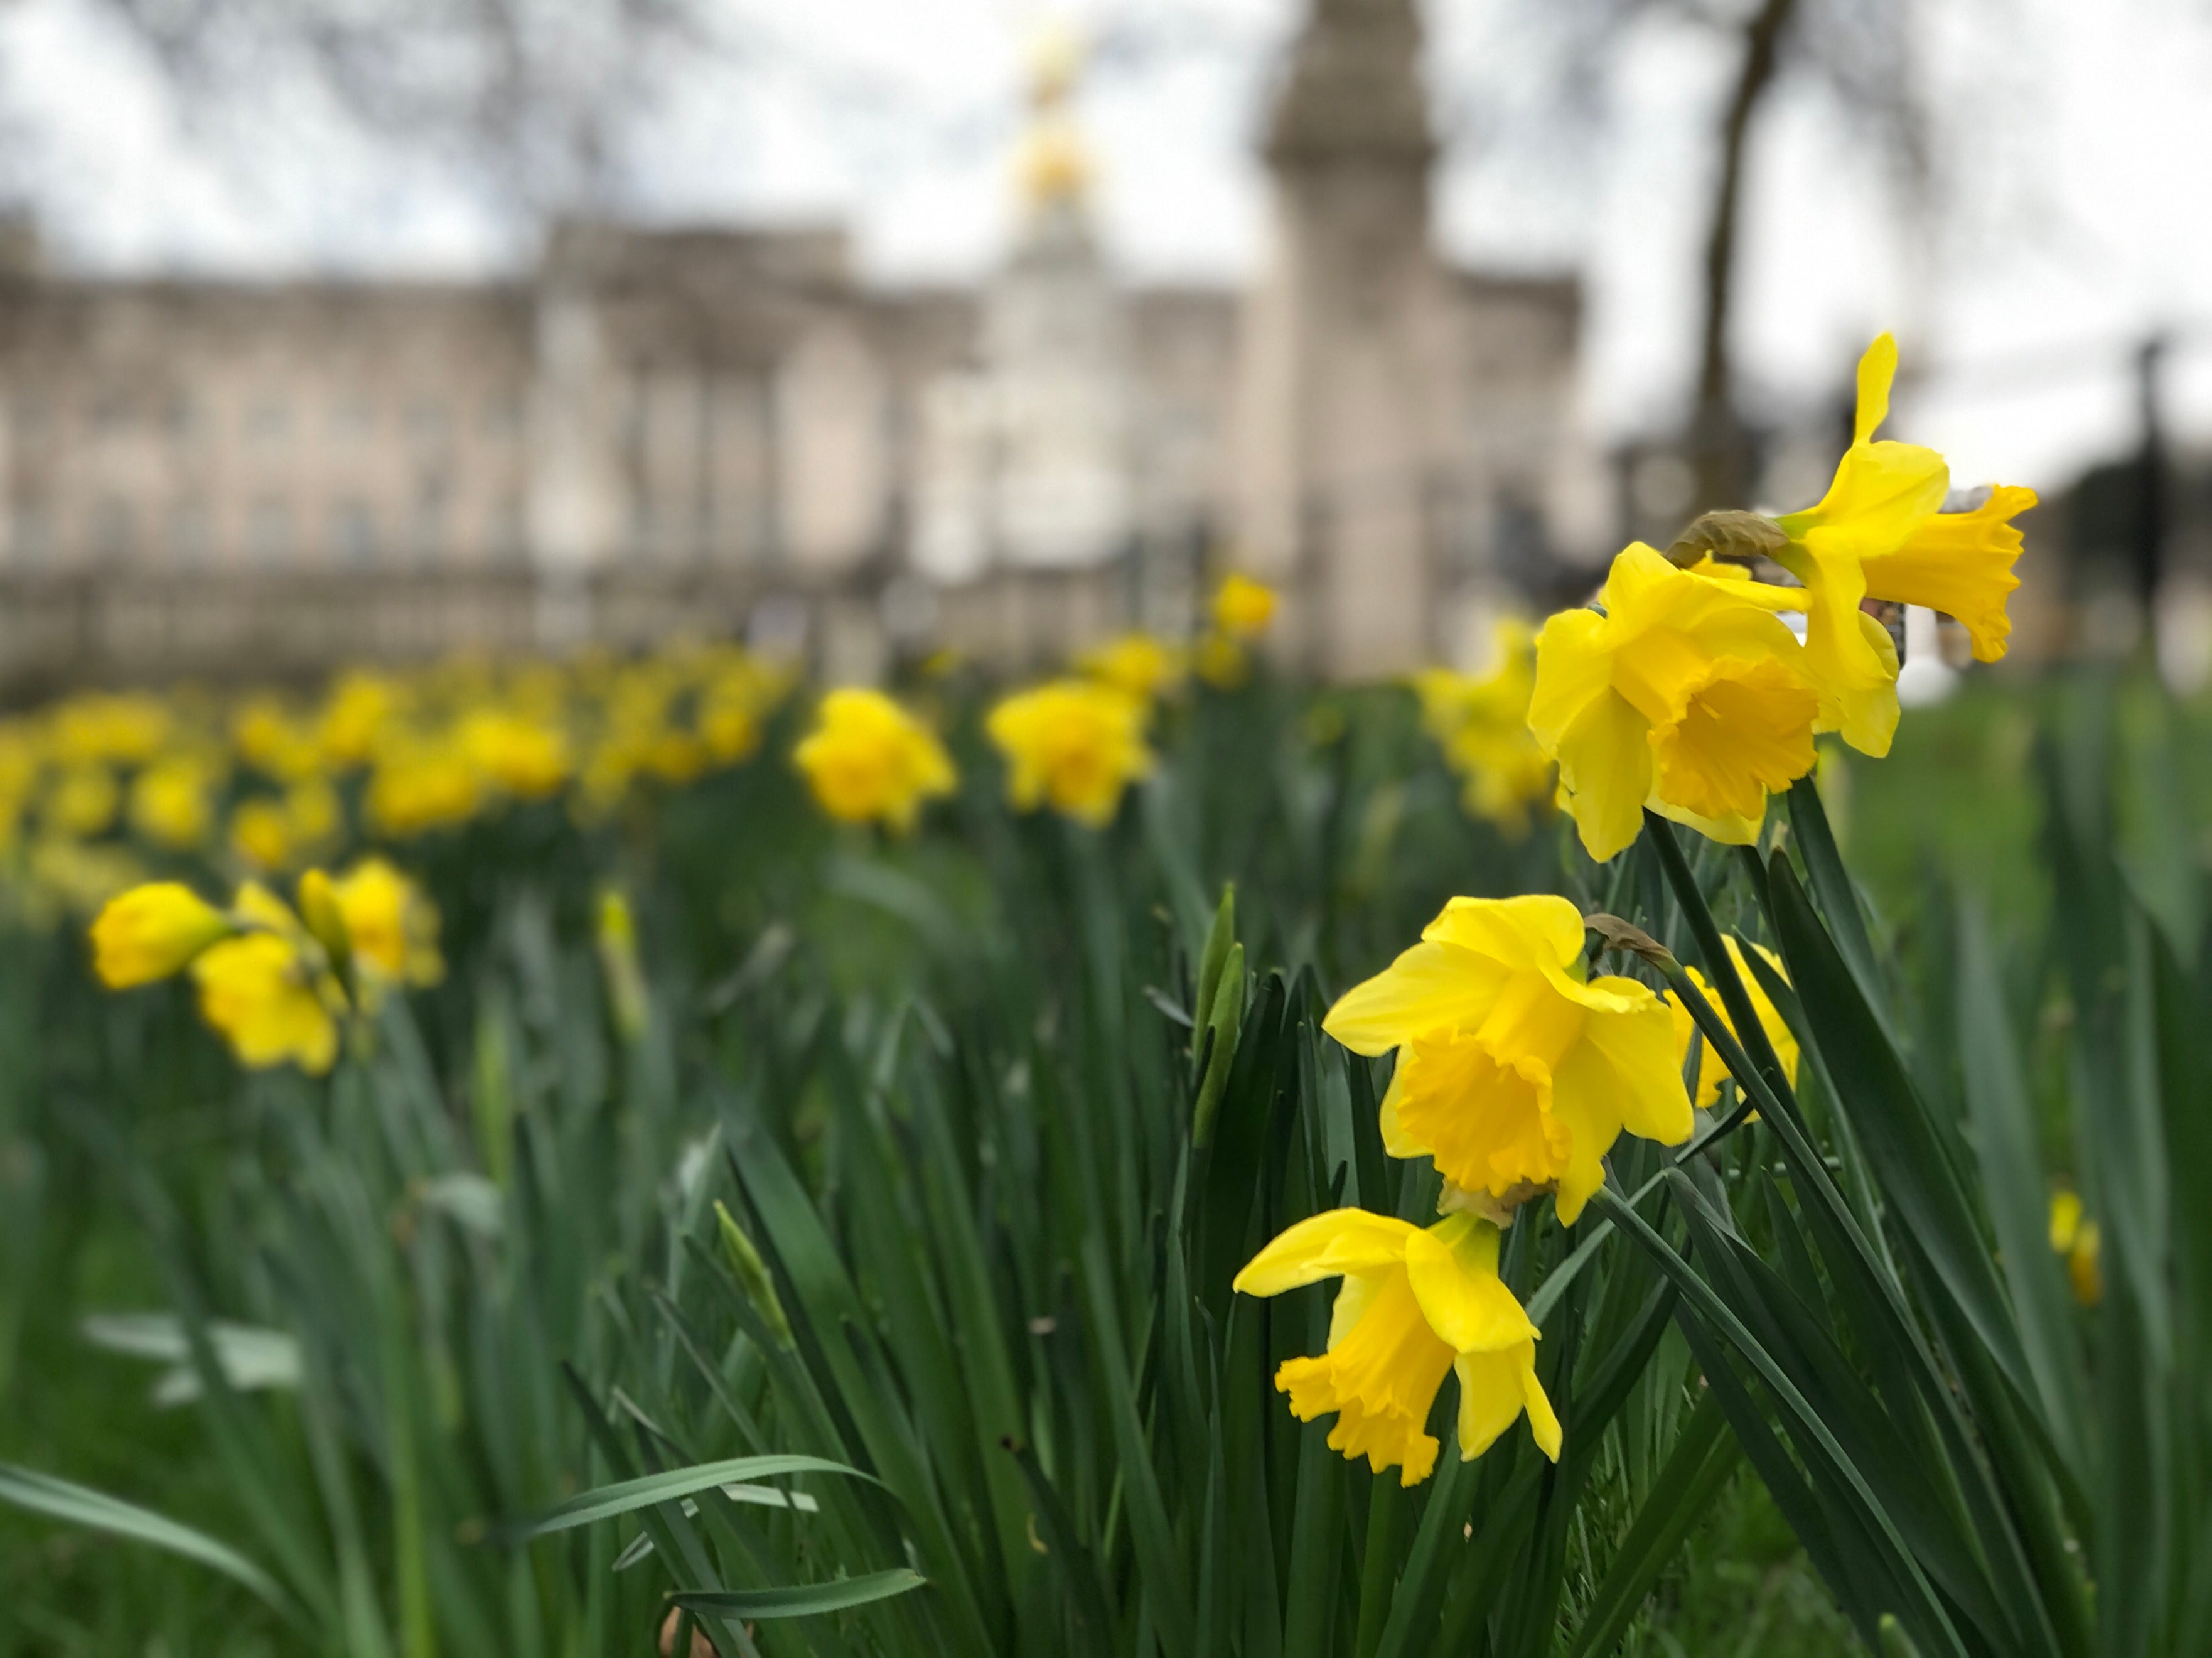 Green shoots? Daffodils outside Buckingham Palace in London